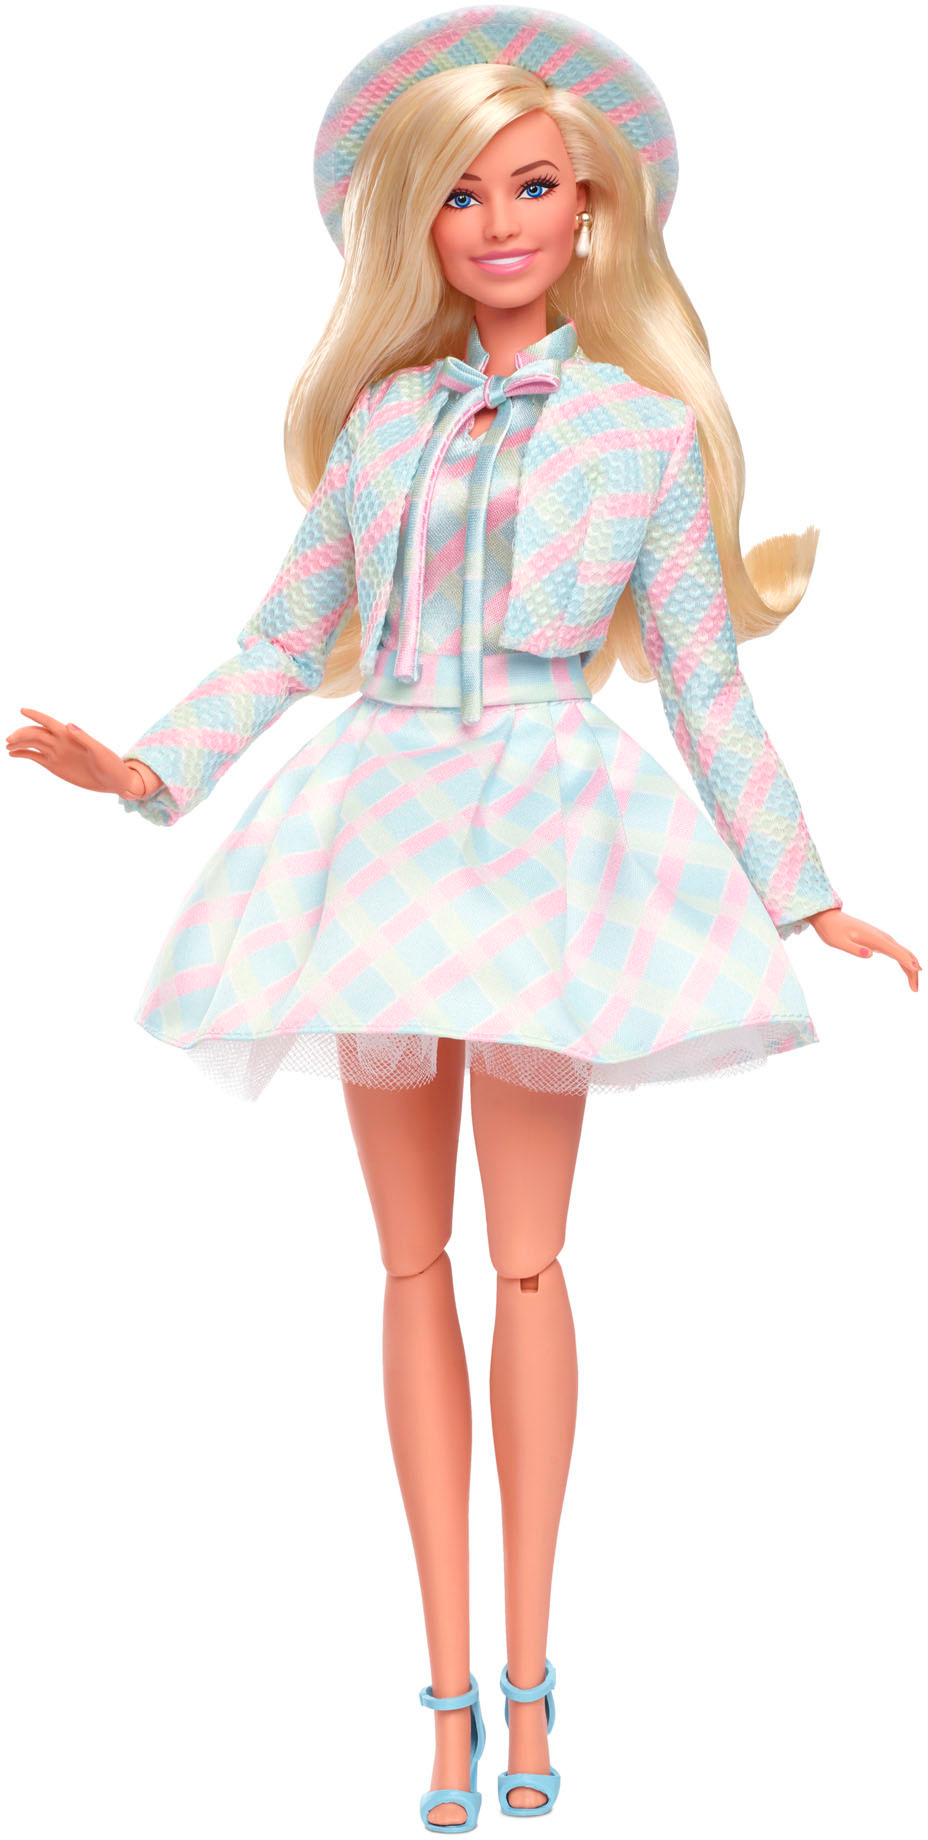 Barbie Signature Looks 11.5 Tall Doll HBX93 - Best Buy